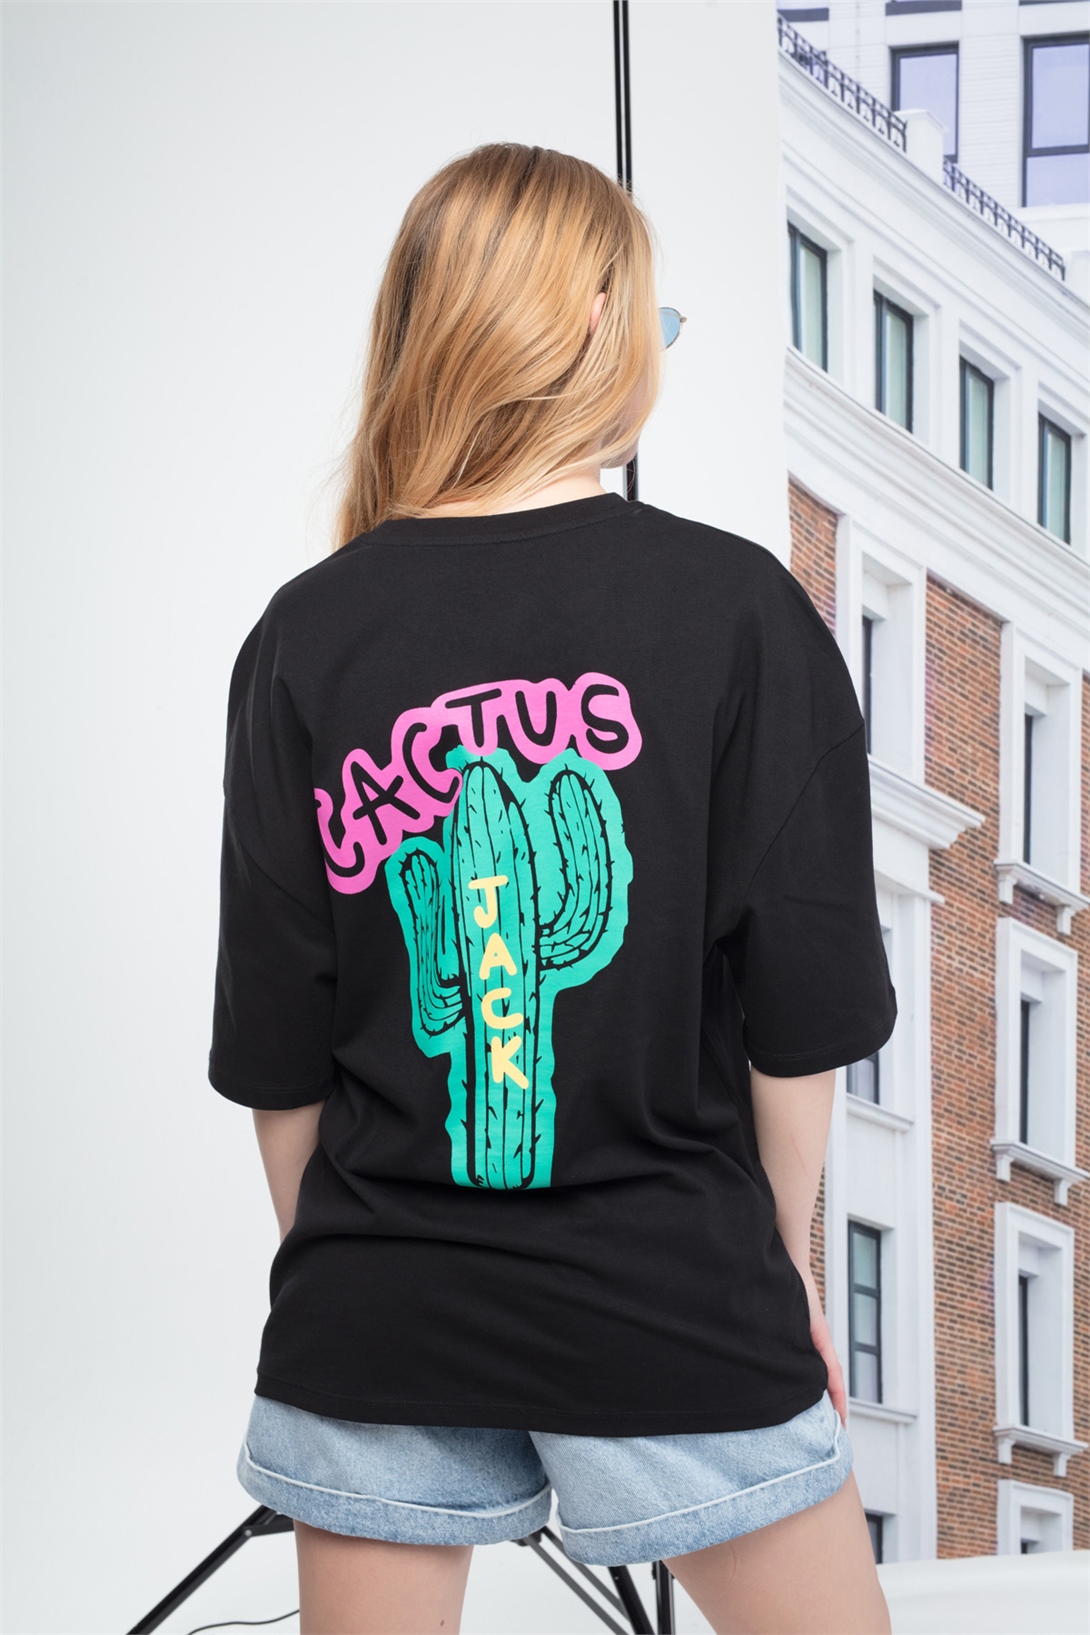 Trendiz Unisex Cactusjack Tshirt Siyah